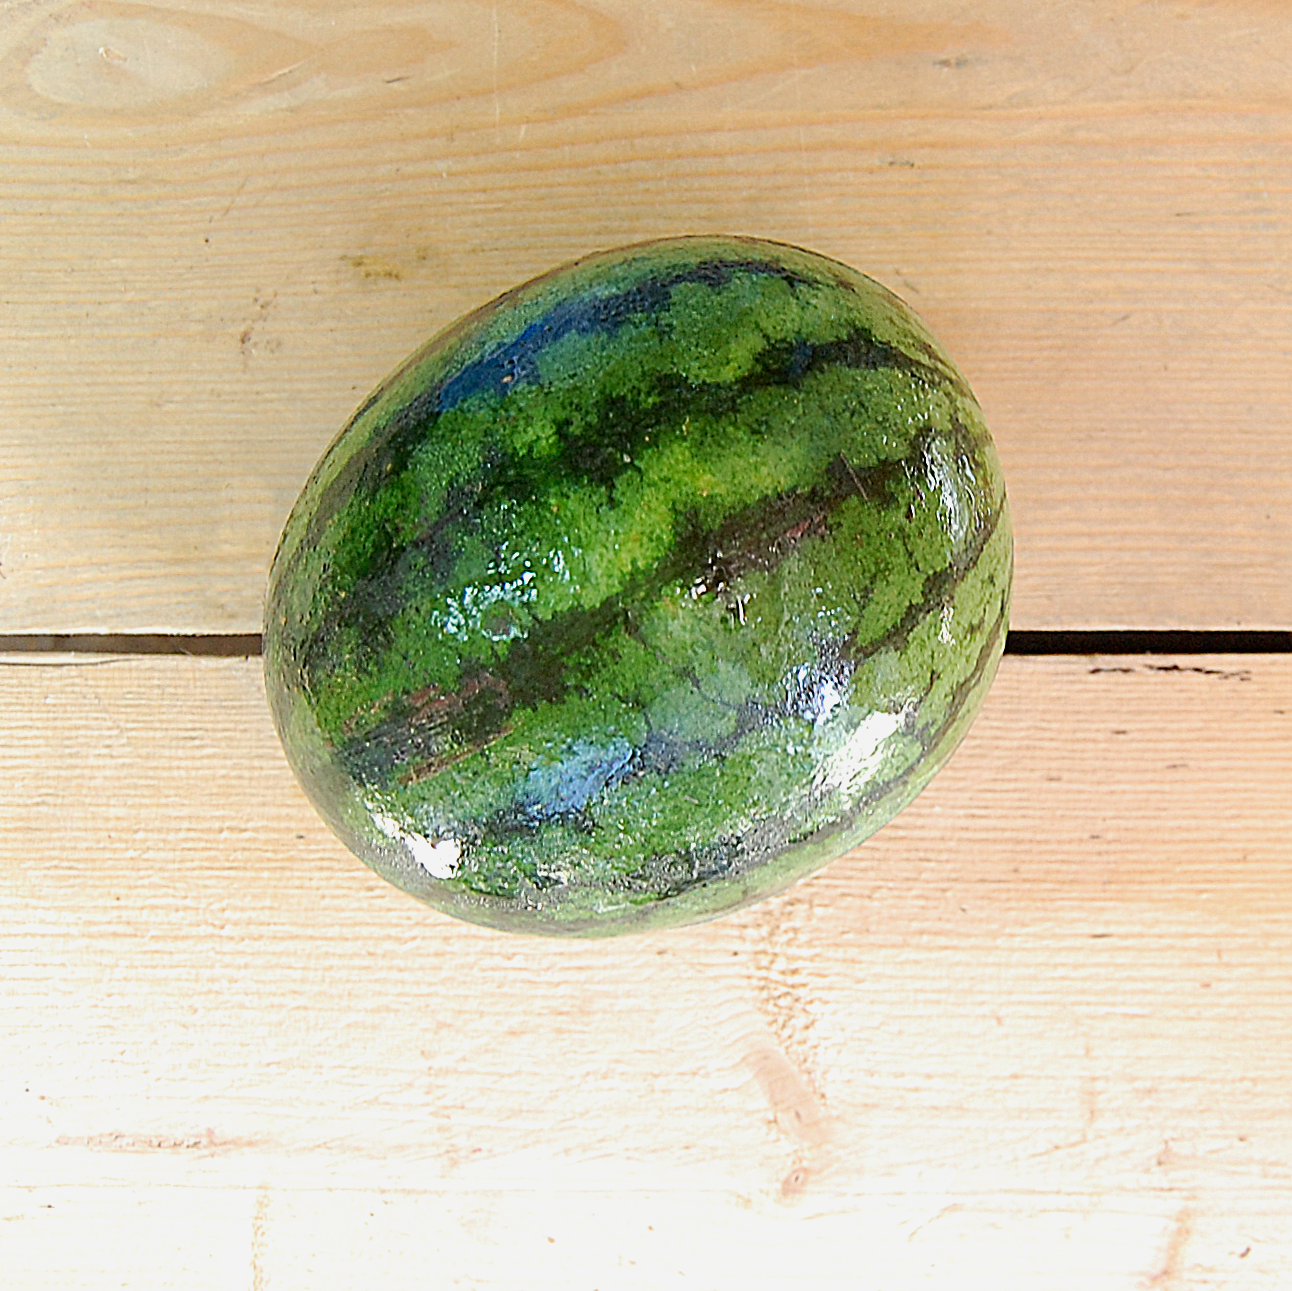 watermelon (approx 1.5kg)